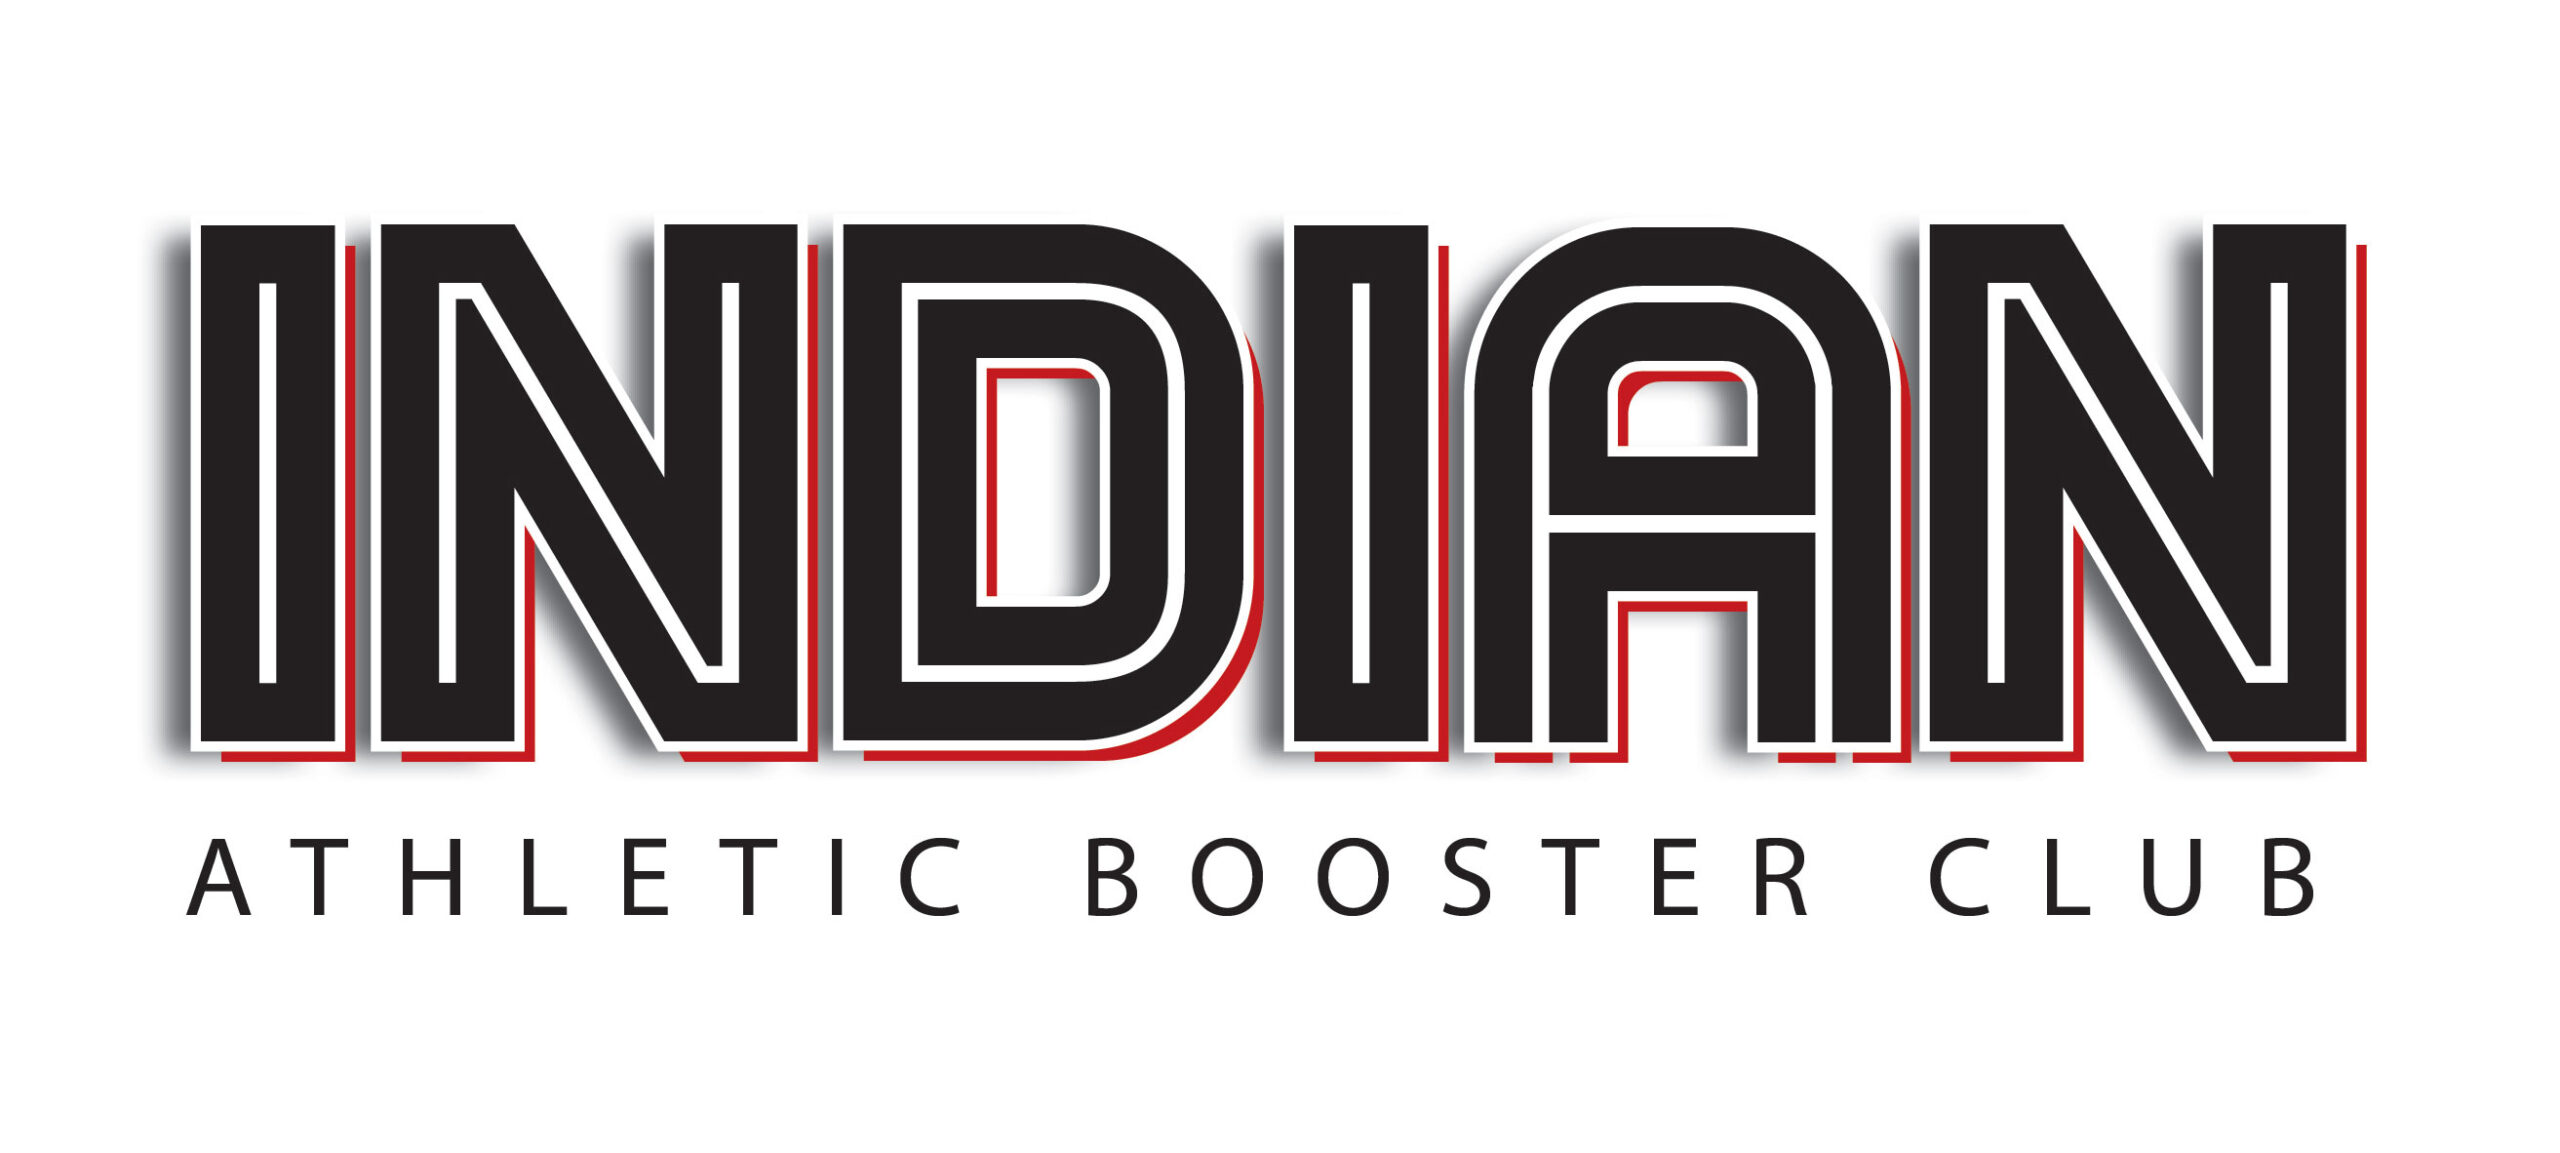 indian athletics logo